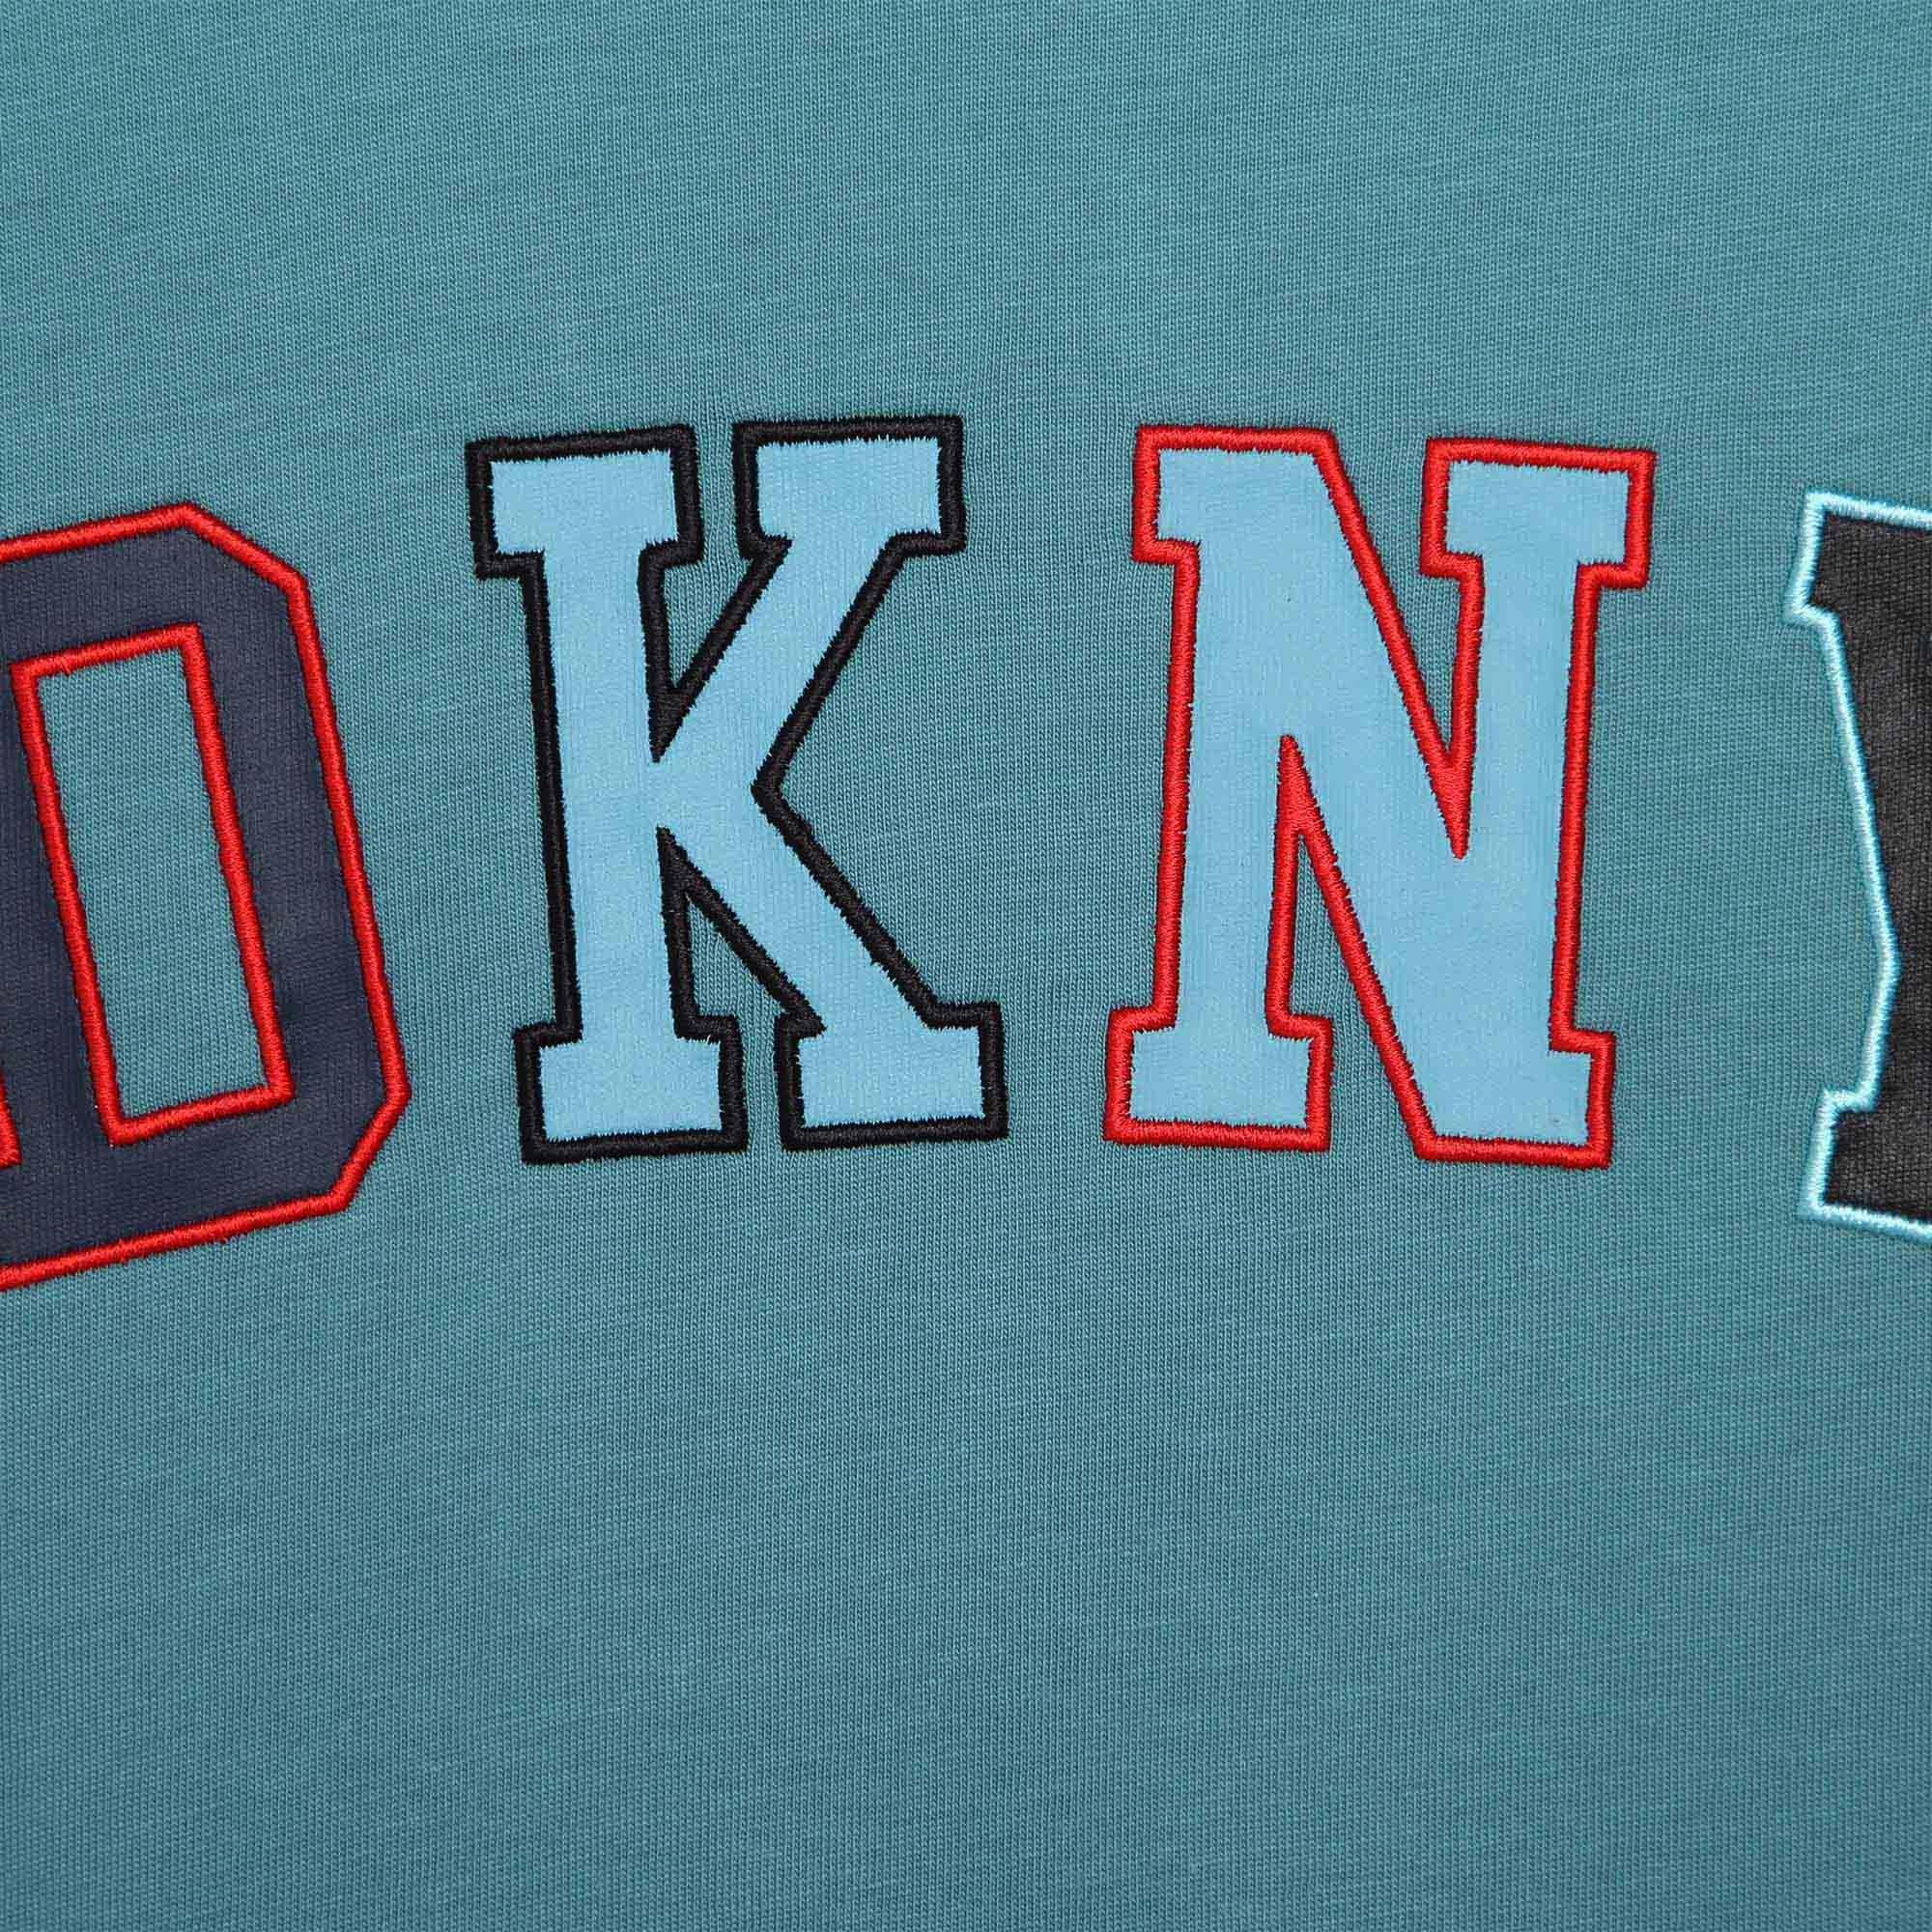 DKNY Turquoise Logo Short Sleeve Tee Shirt